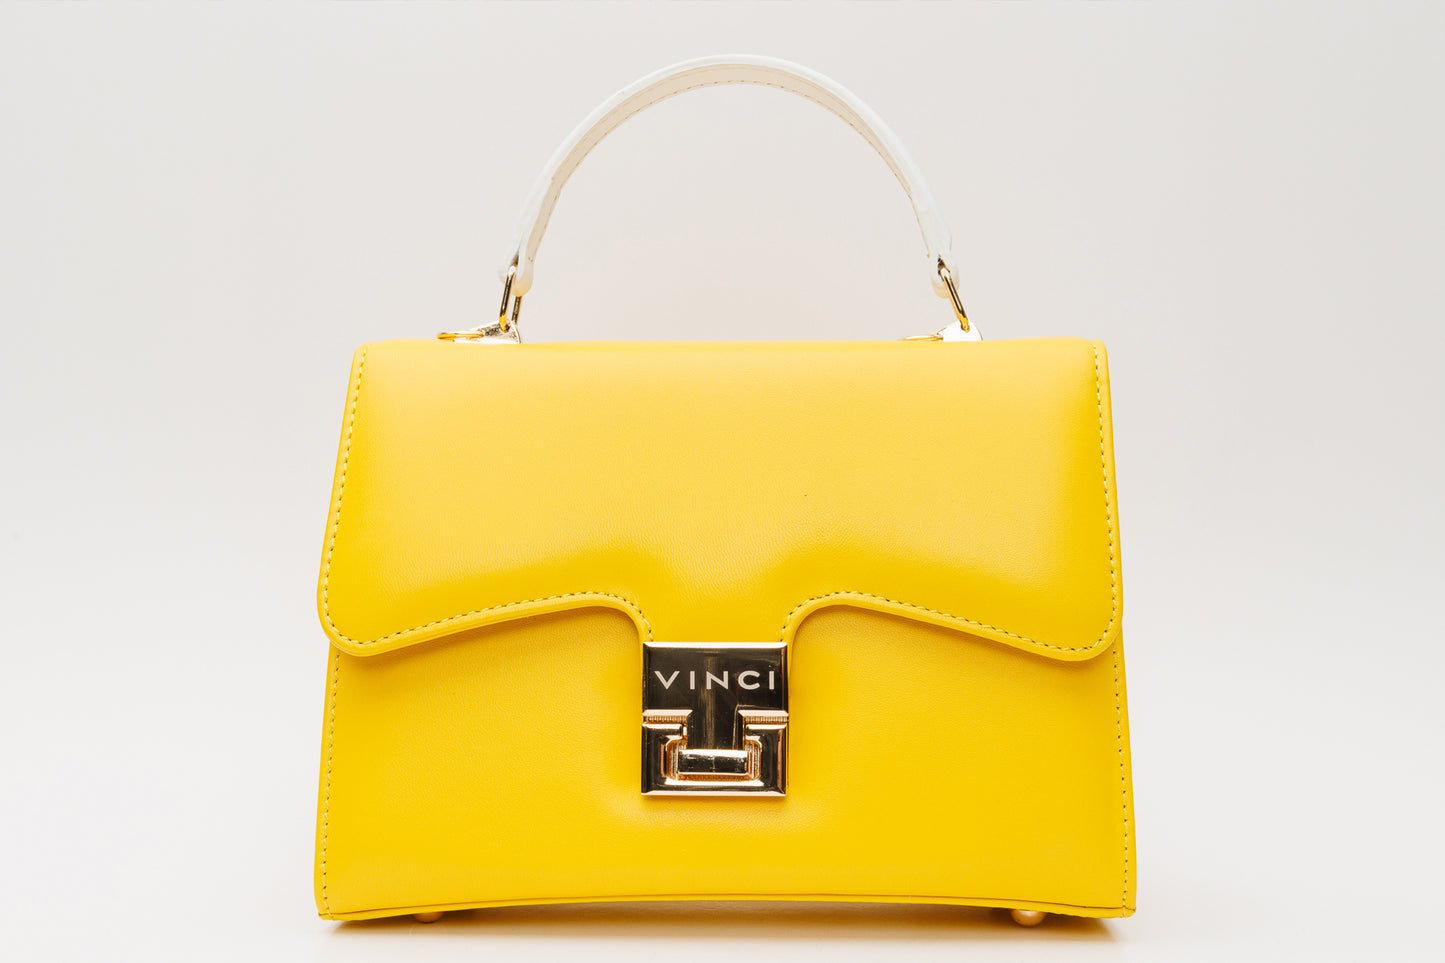 The Duffryn Yellow Leather Handbag